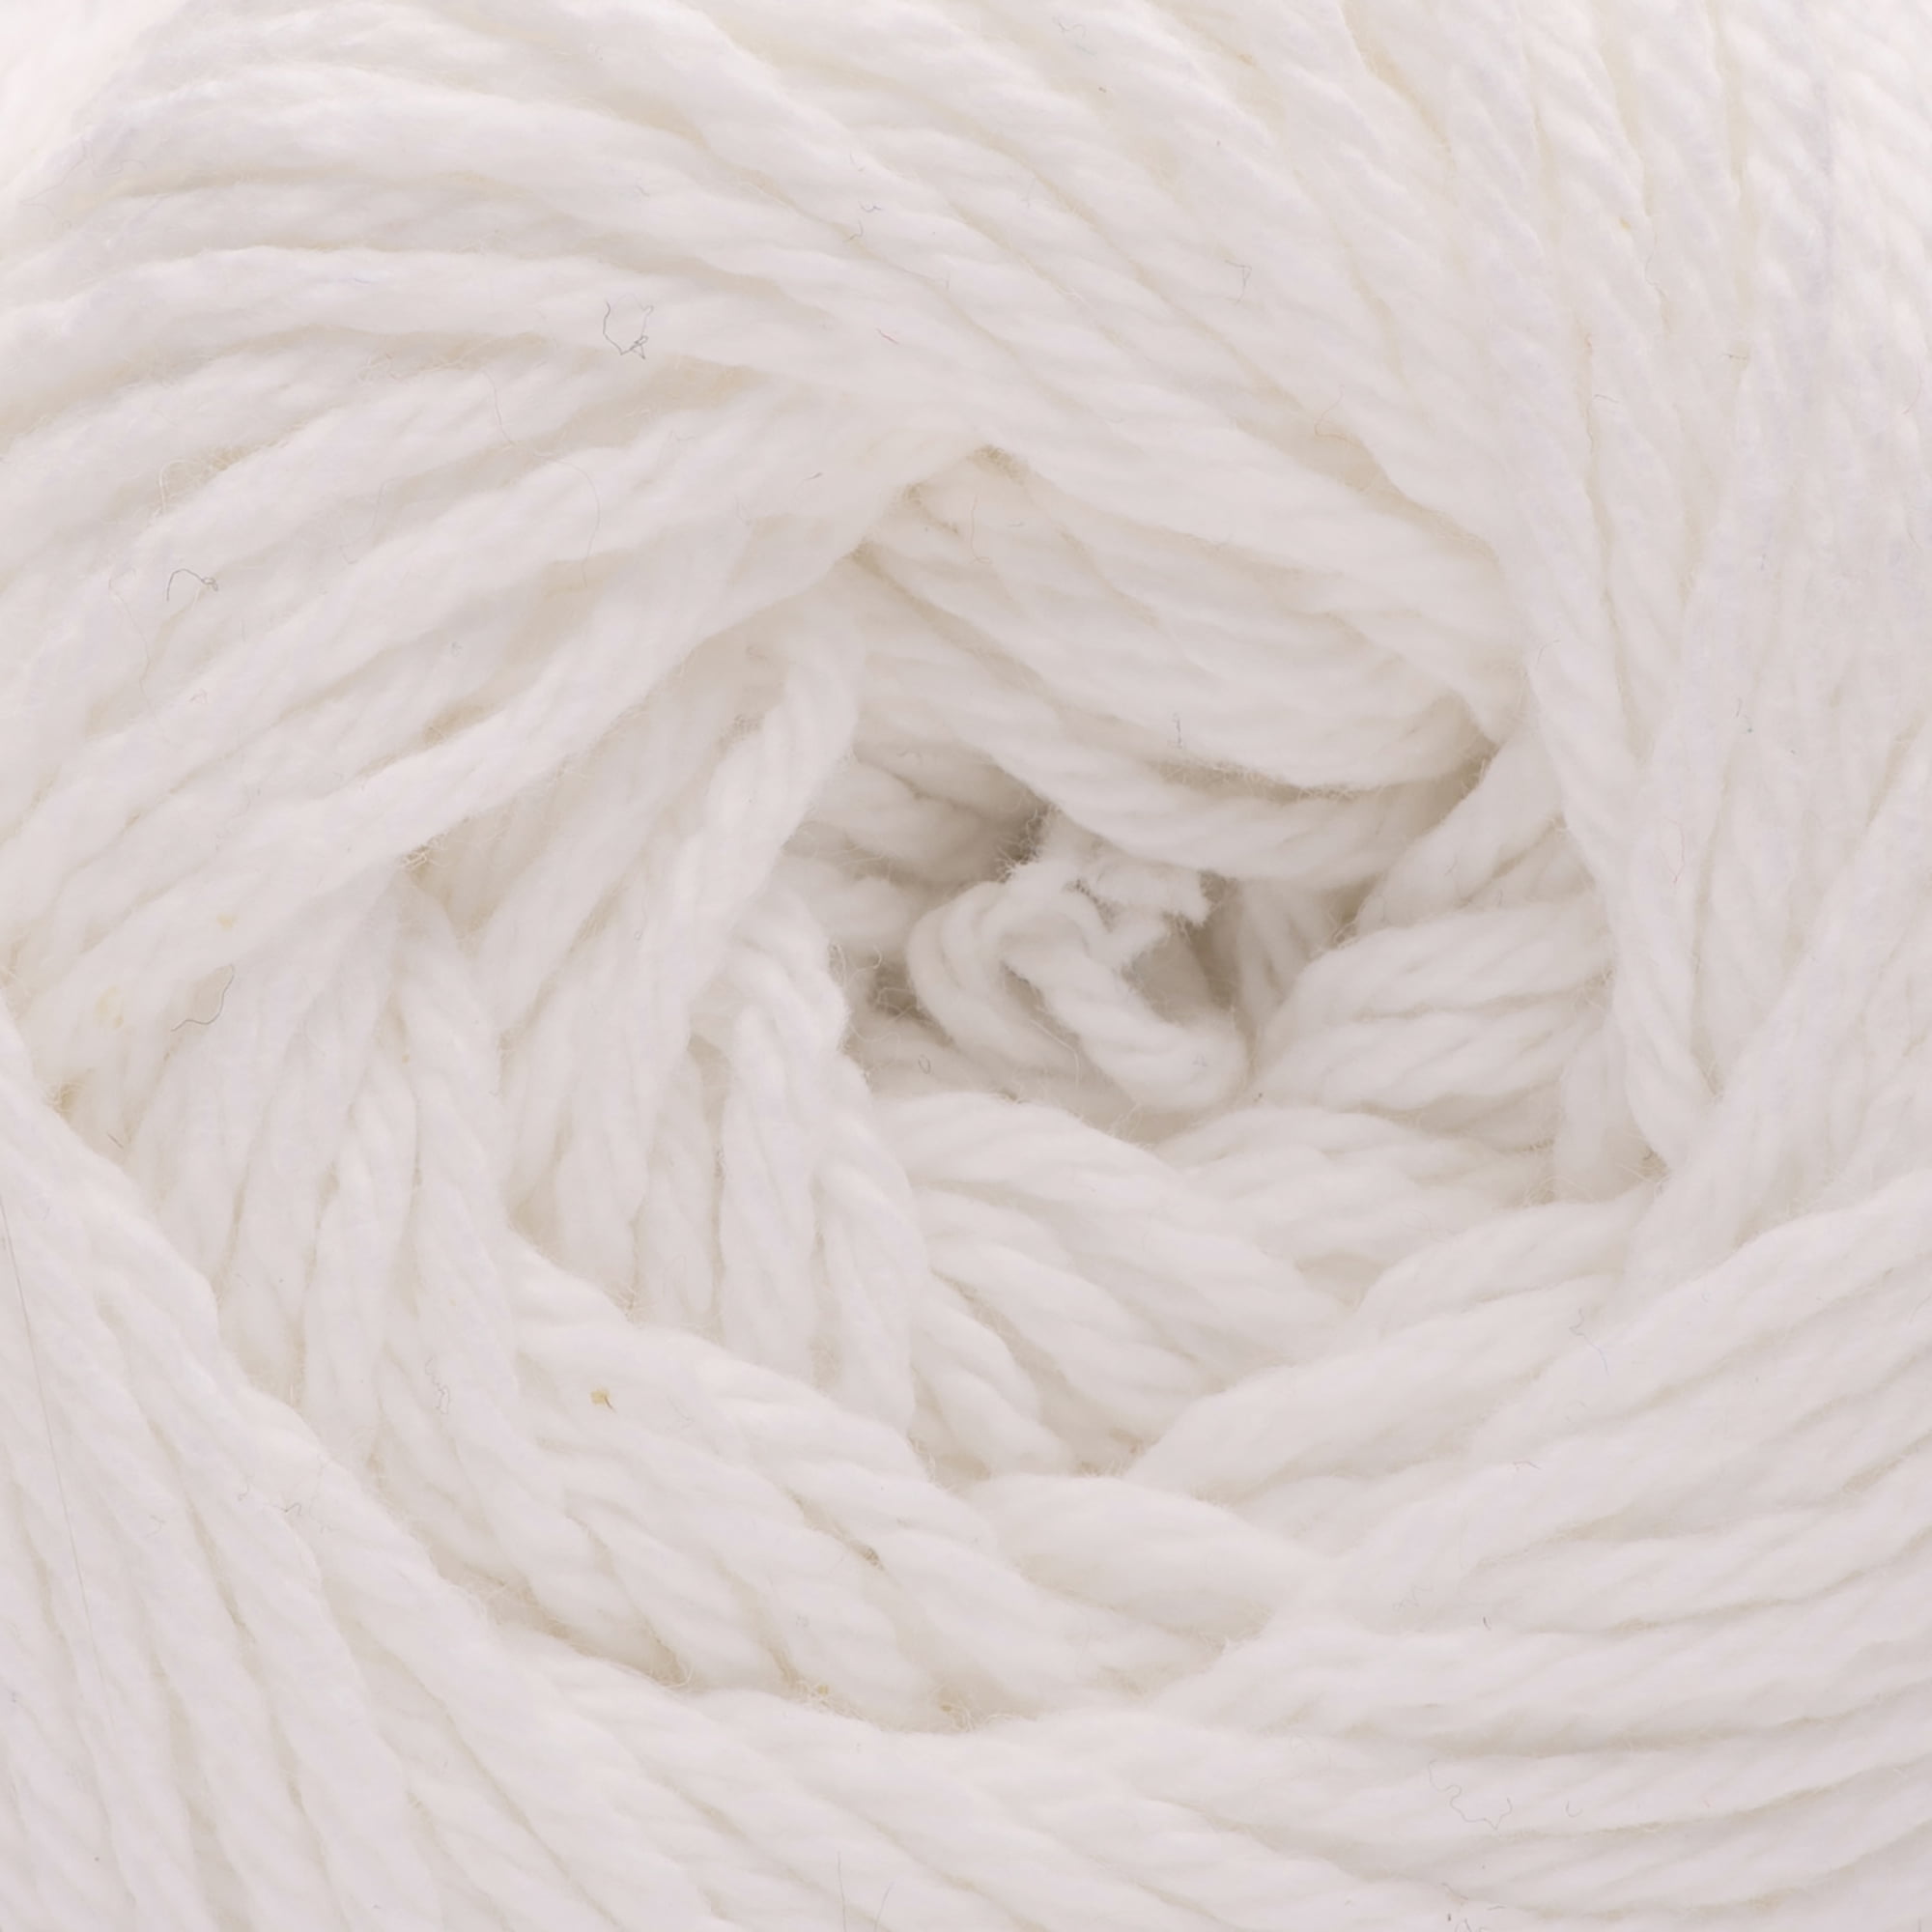 Cotton Yarn by Kotton 4 ply - White 01